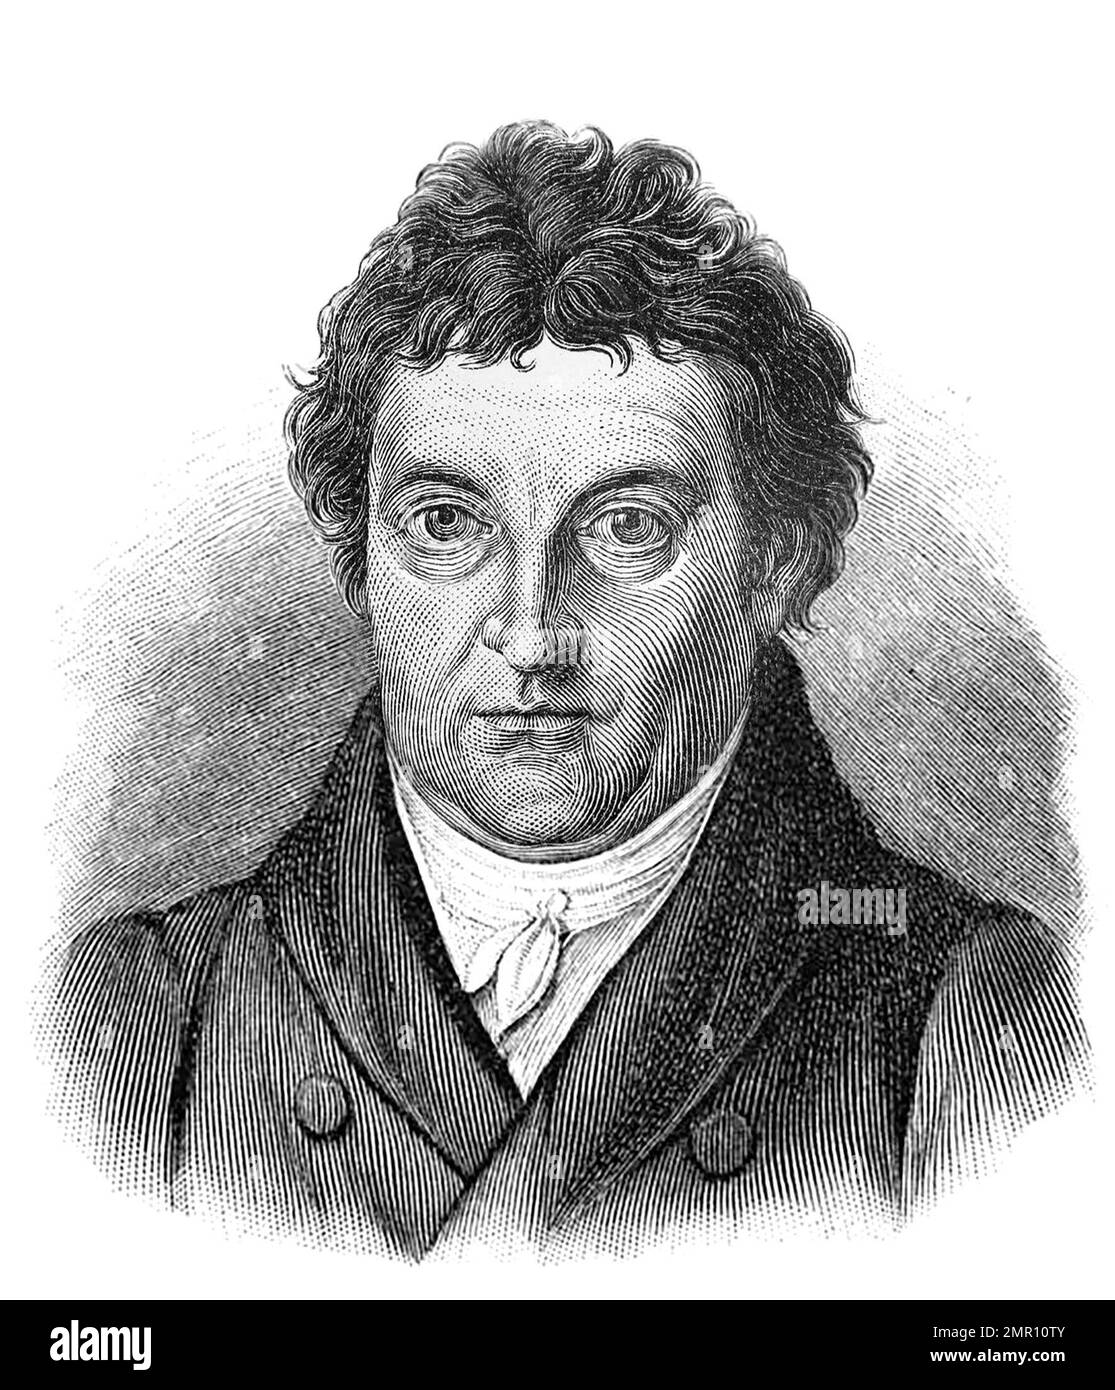 Johann Fichte. Portrait of the German philosopher, Johann Gottlieb Fichte (1762-1814) Stock Photo